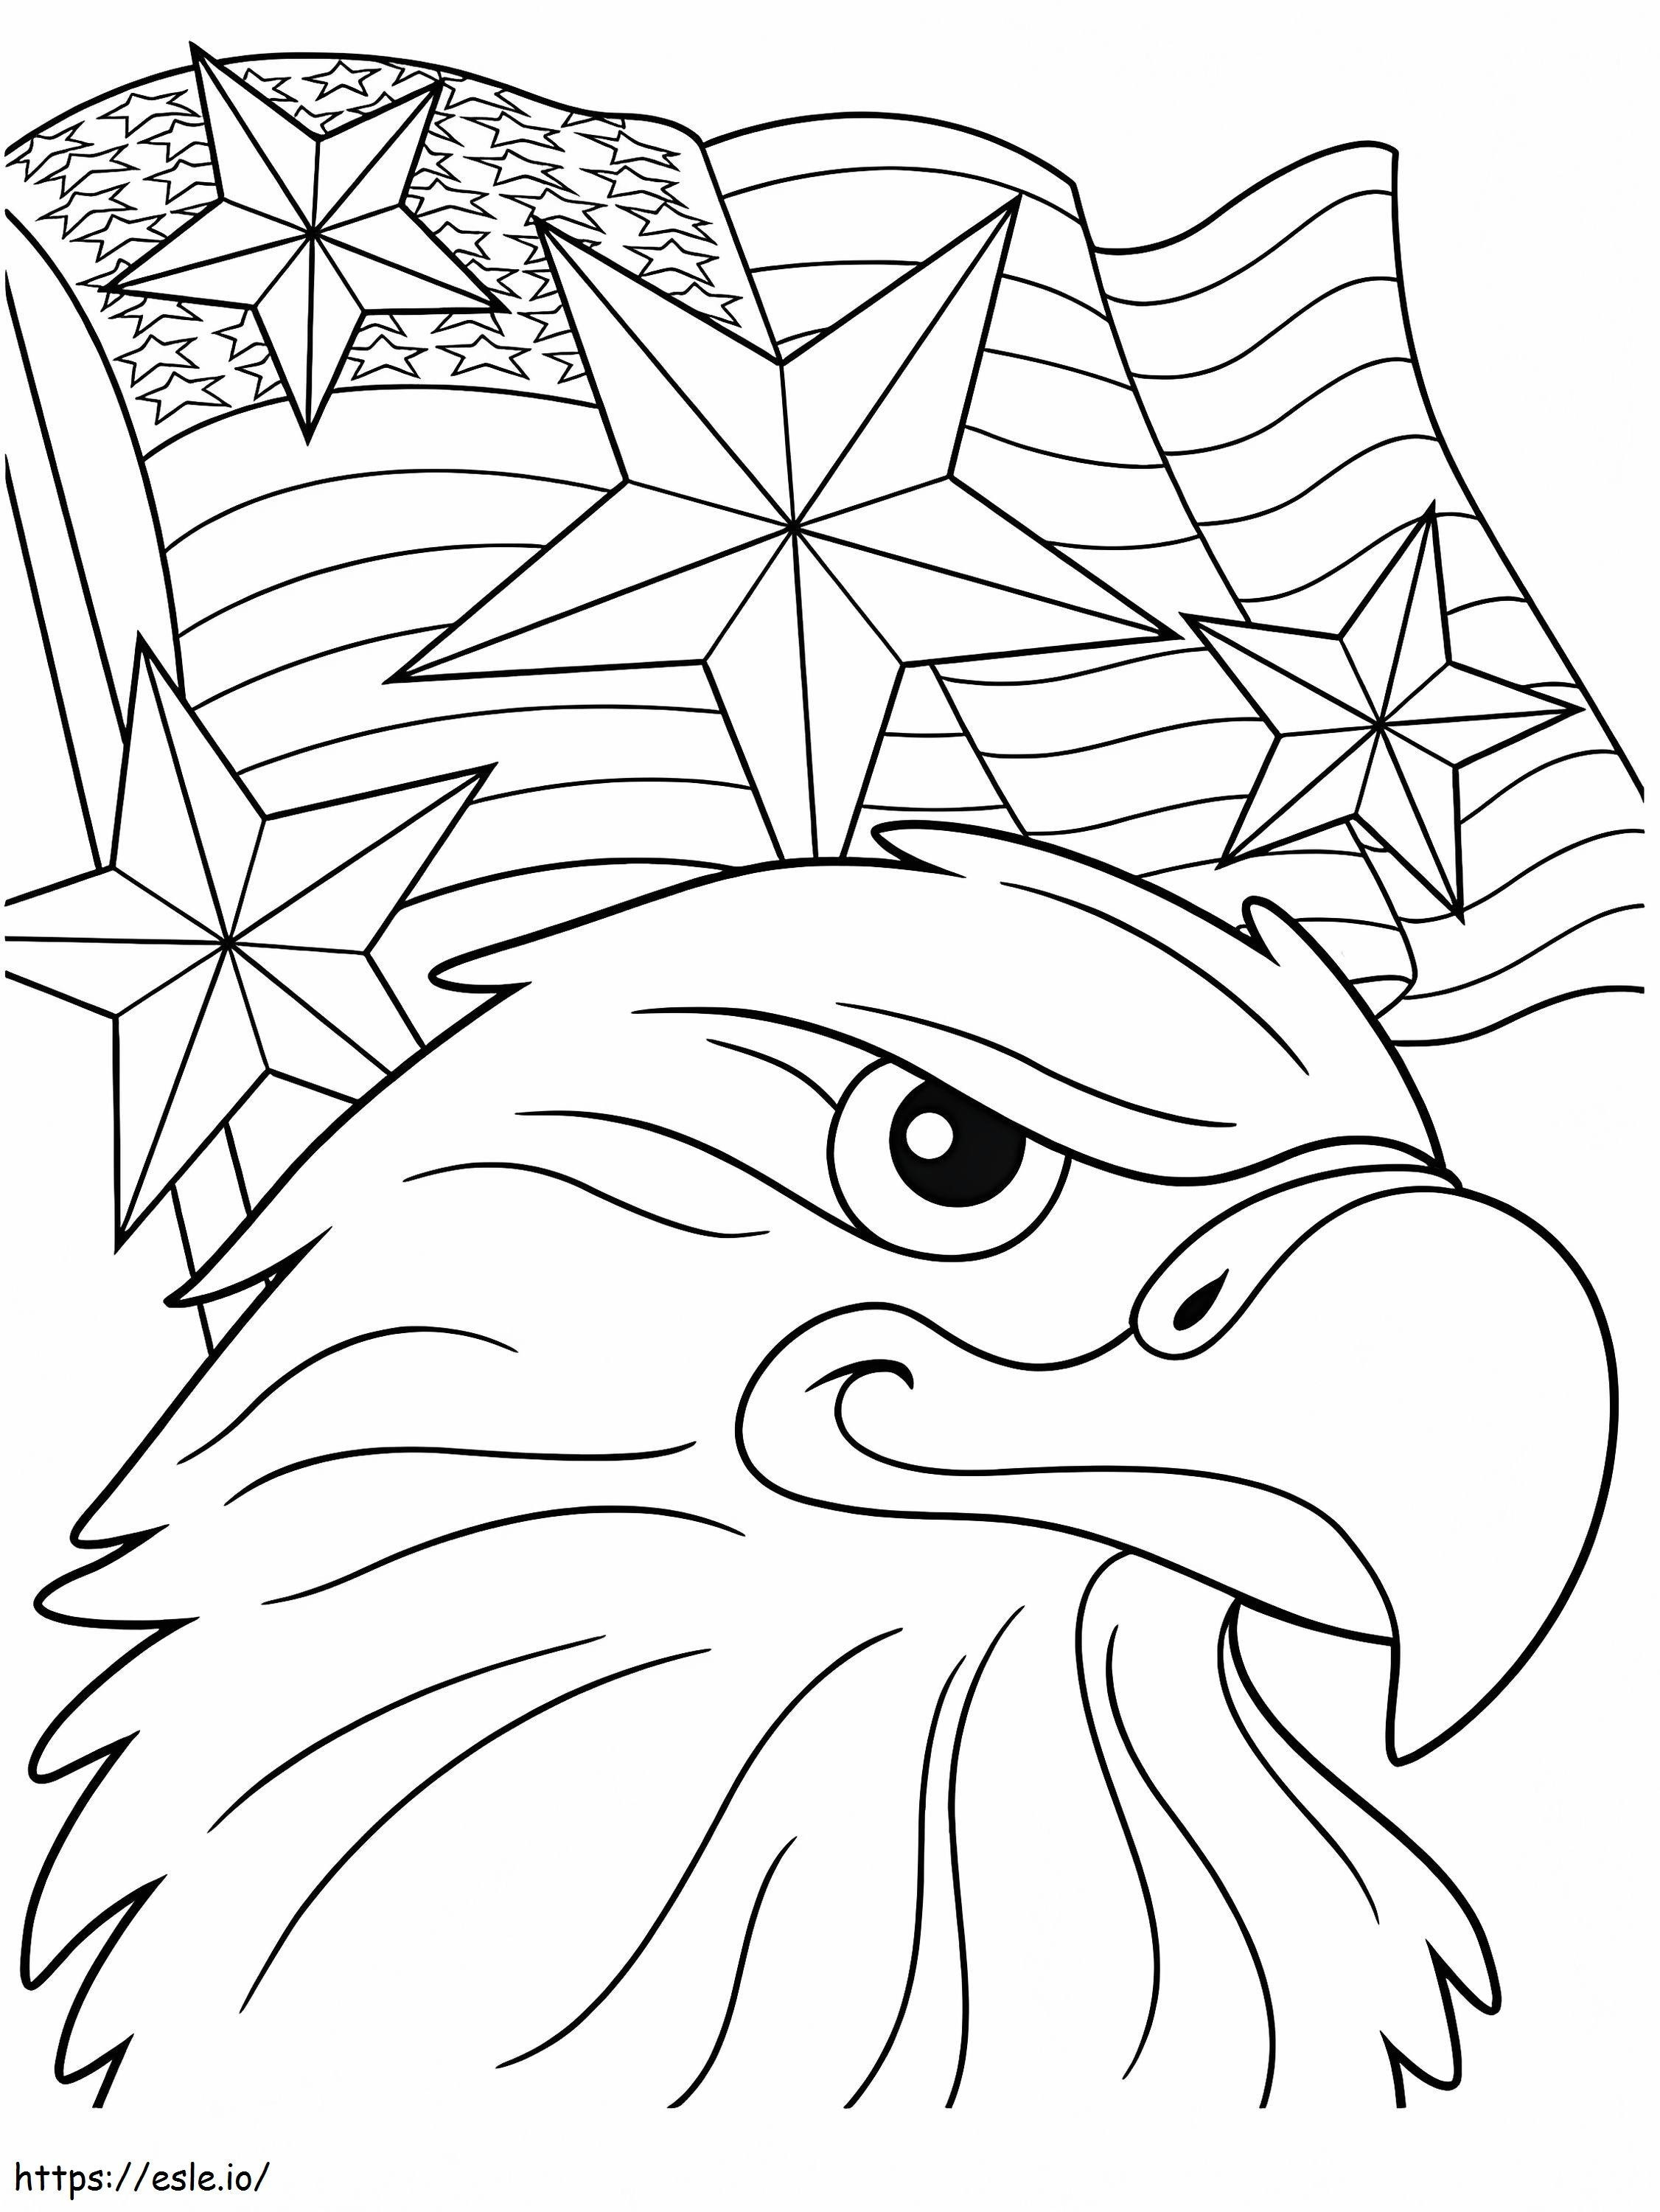 Adler mit Flagge ausmalbilder